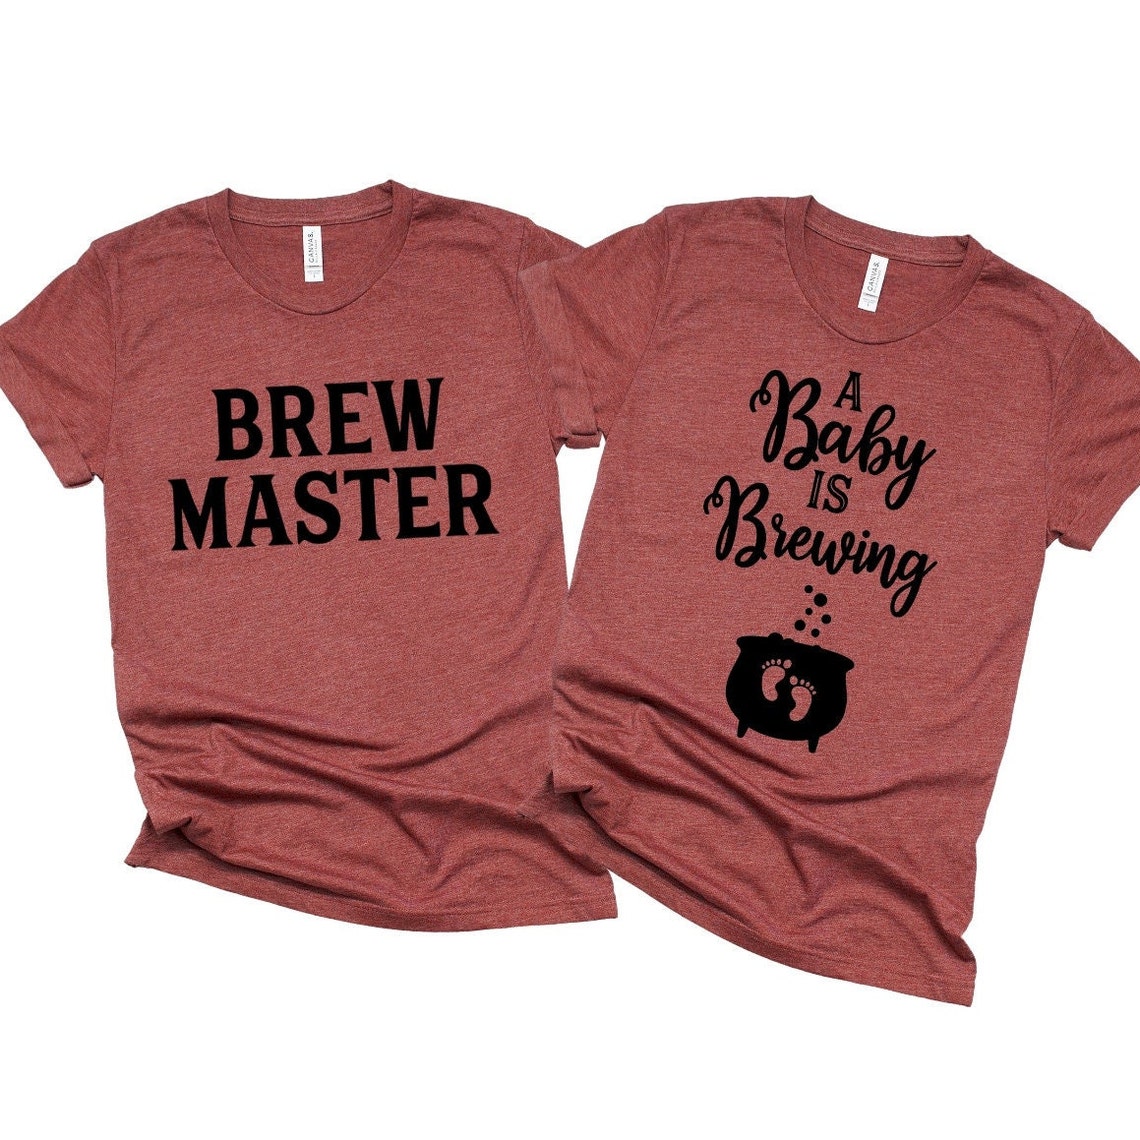 Baby brewing halloween pregnancy shirt, halloween maternity shirt, halloween pregnancy announcement shirt, halloween pregnancy shirt